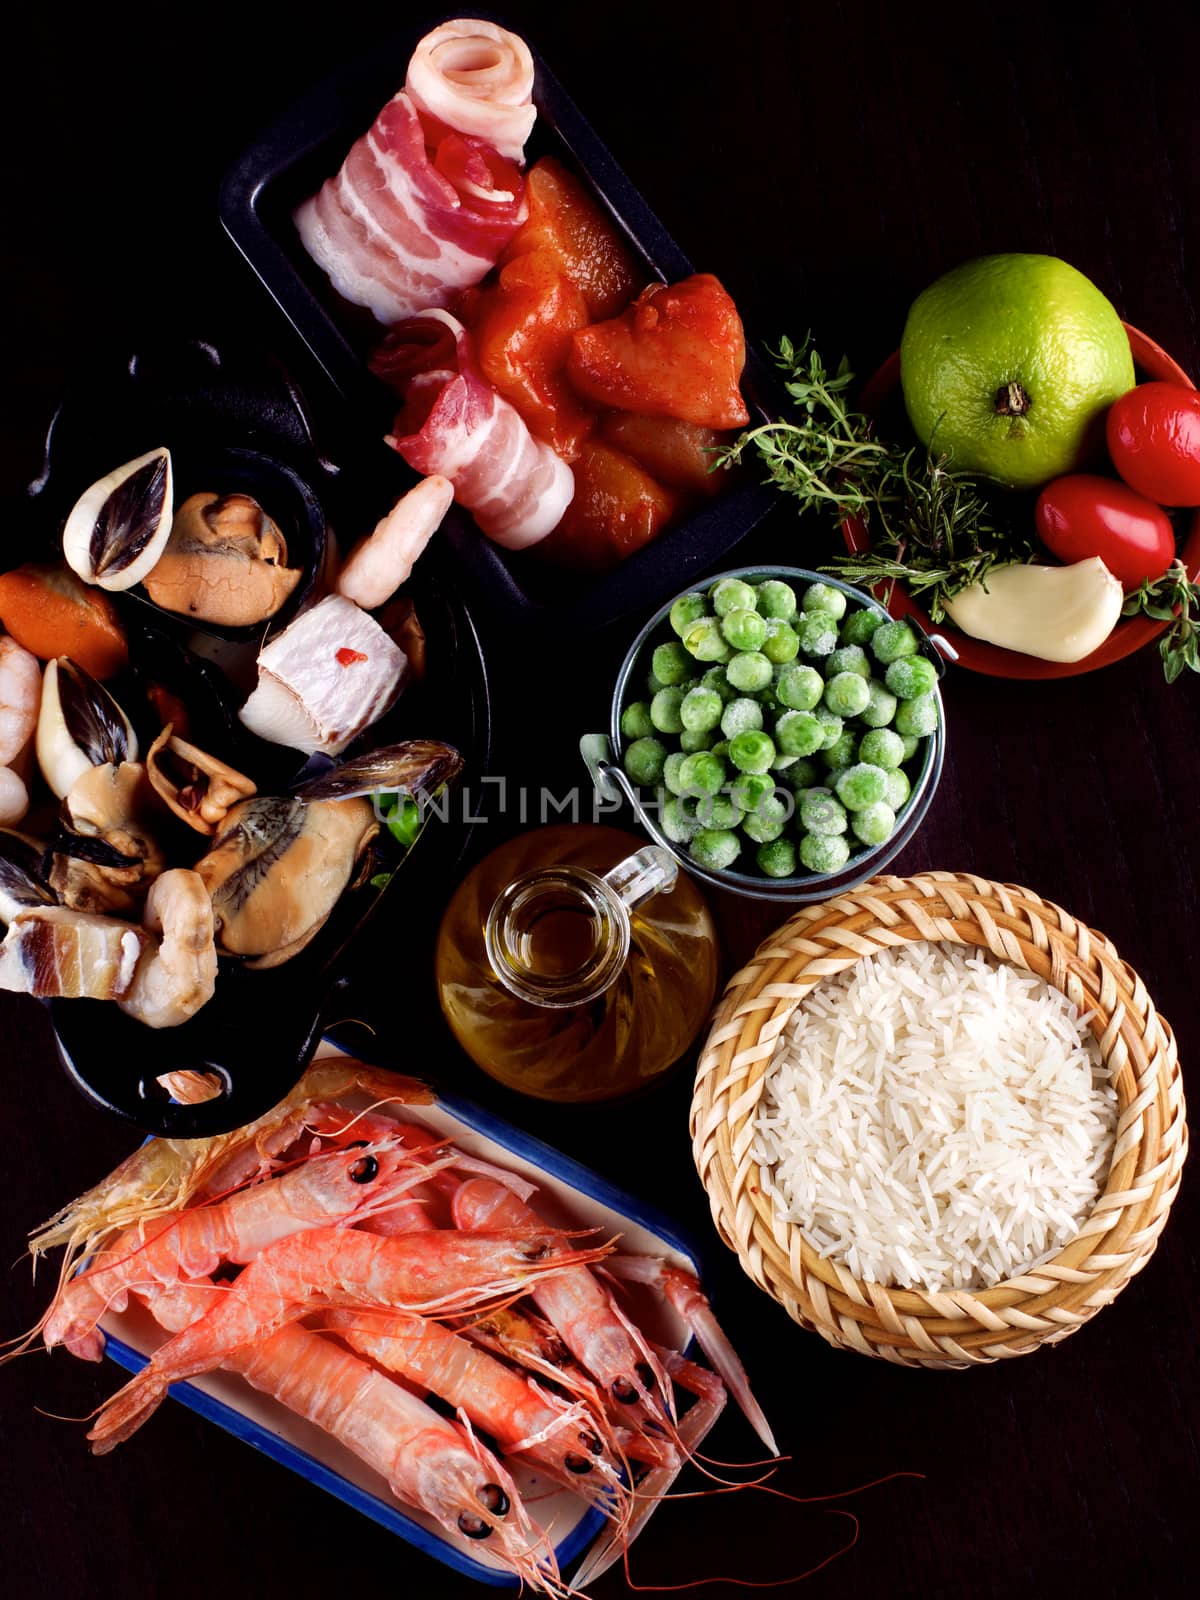 Raw Ingredients for Paella by zhekos